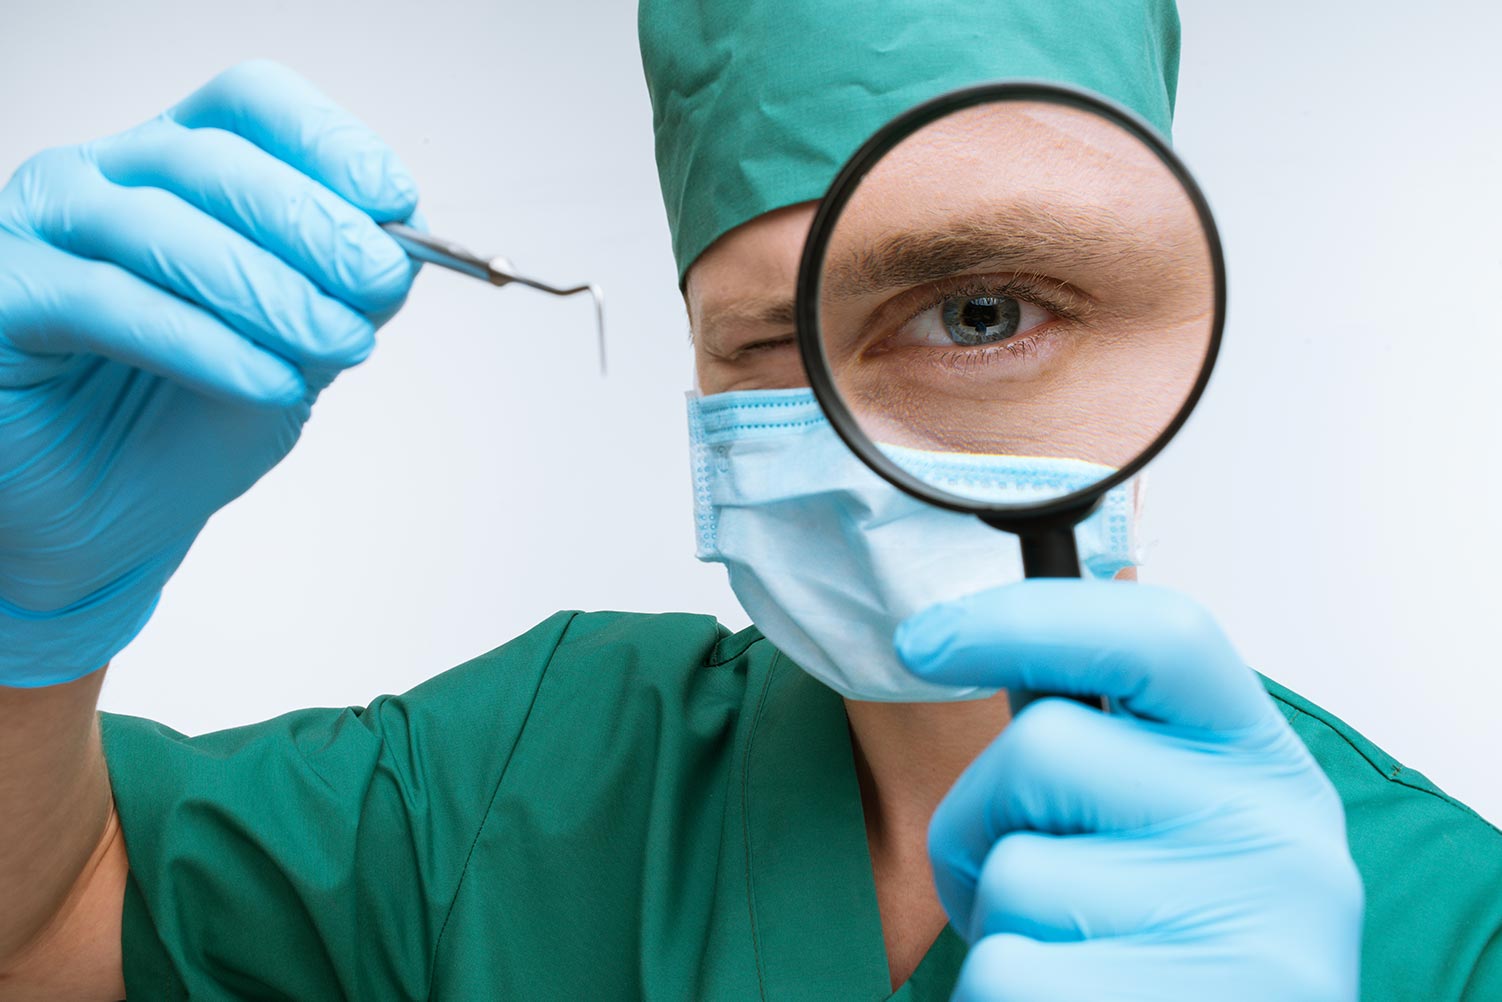 dental surgeon looking through magnifying glass